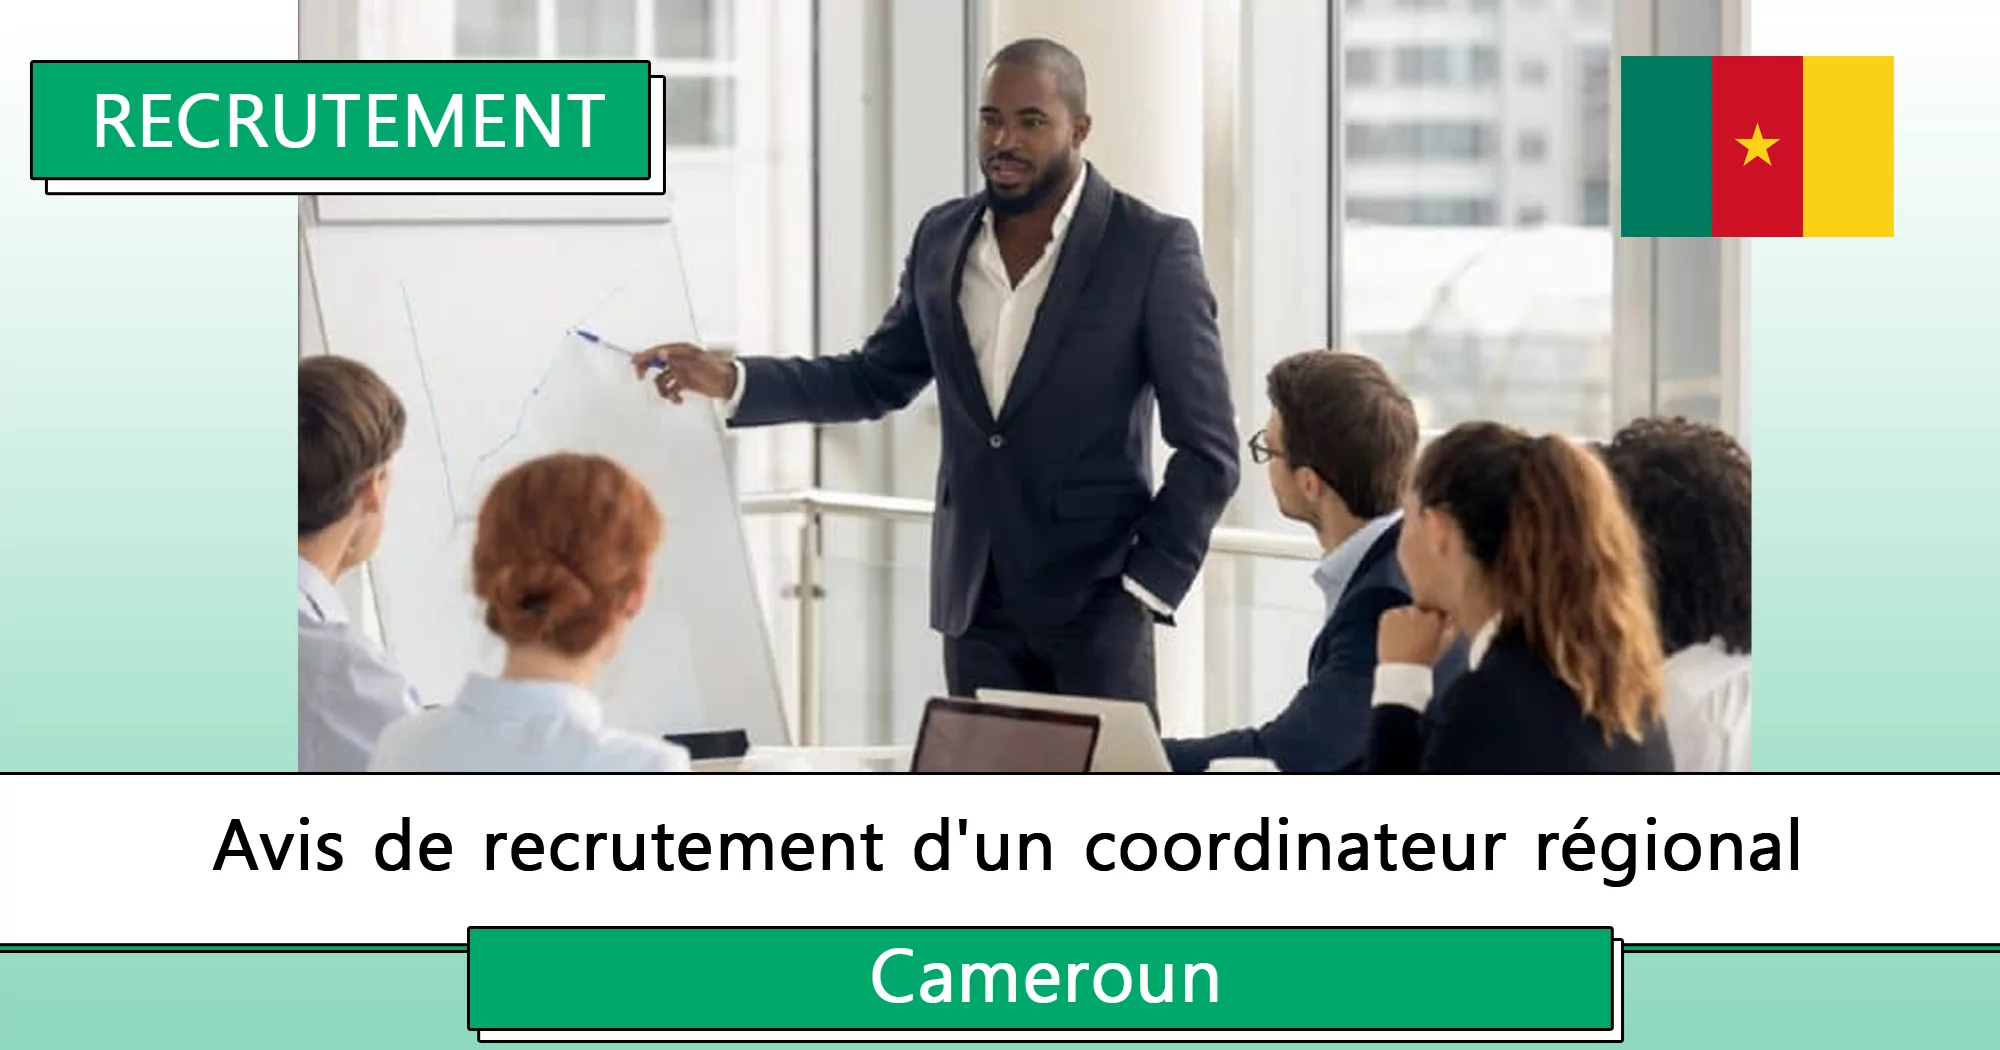 Avis de recrutement d’un coordinateur régional, Cameroun